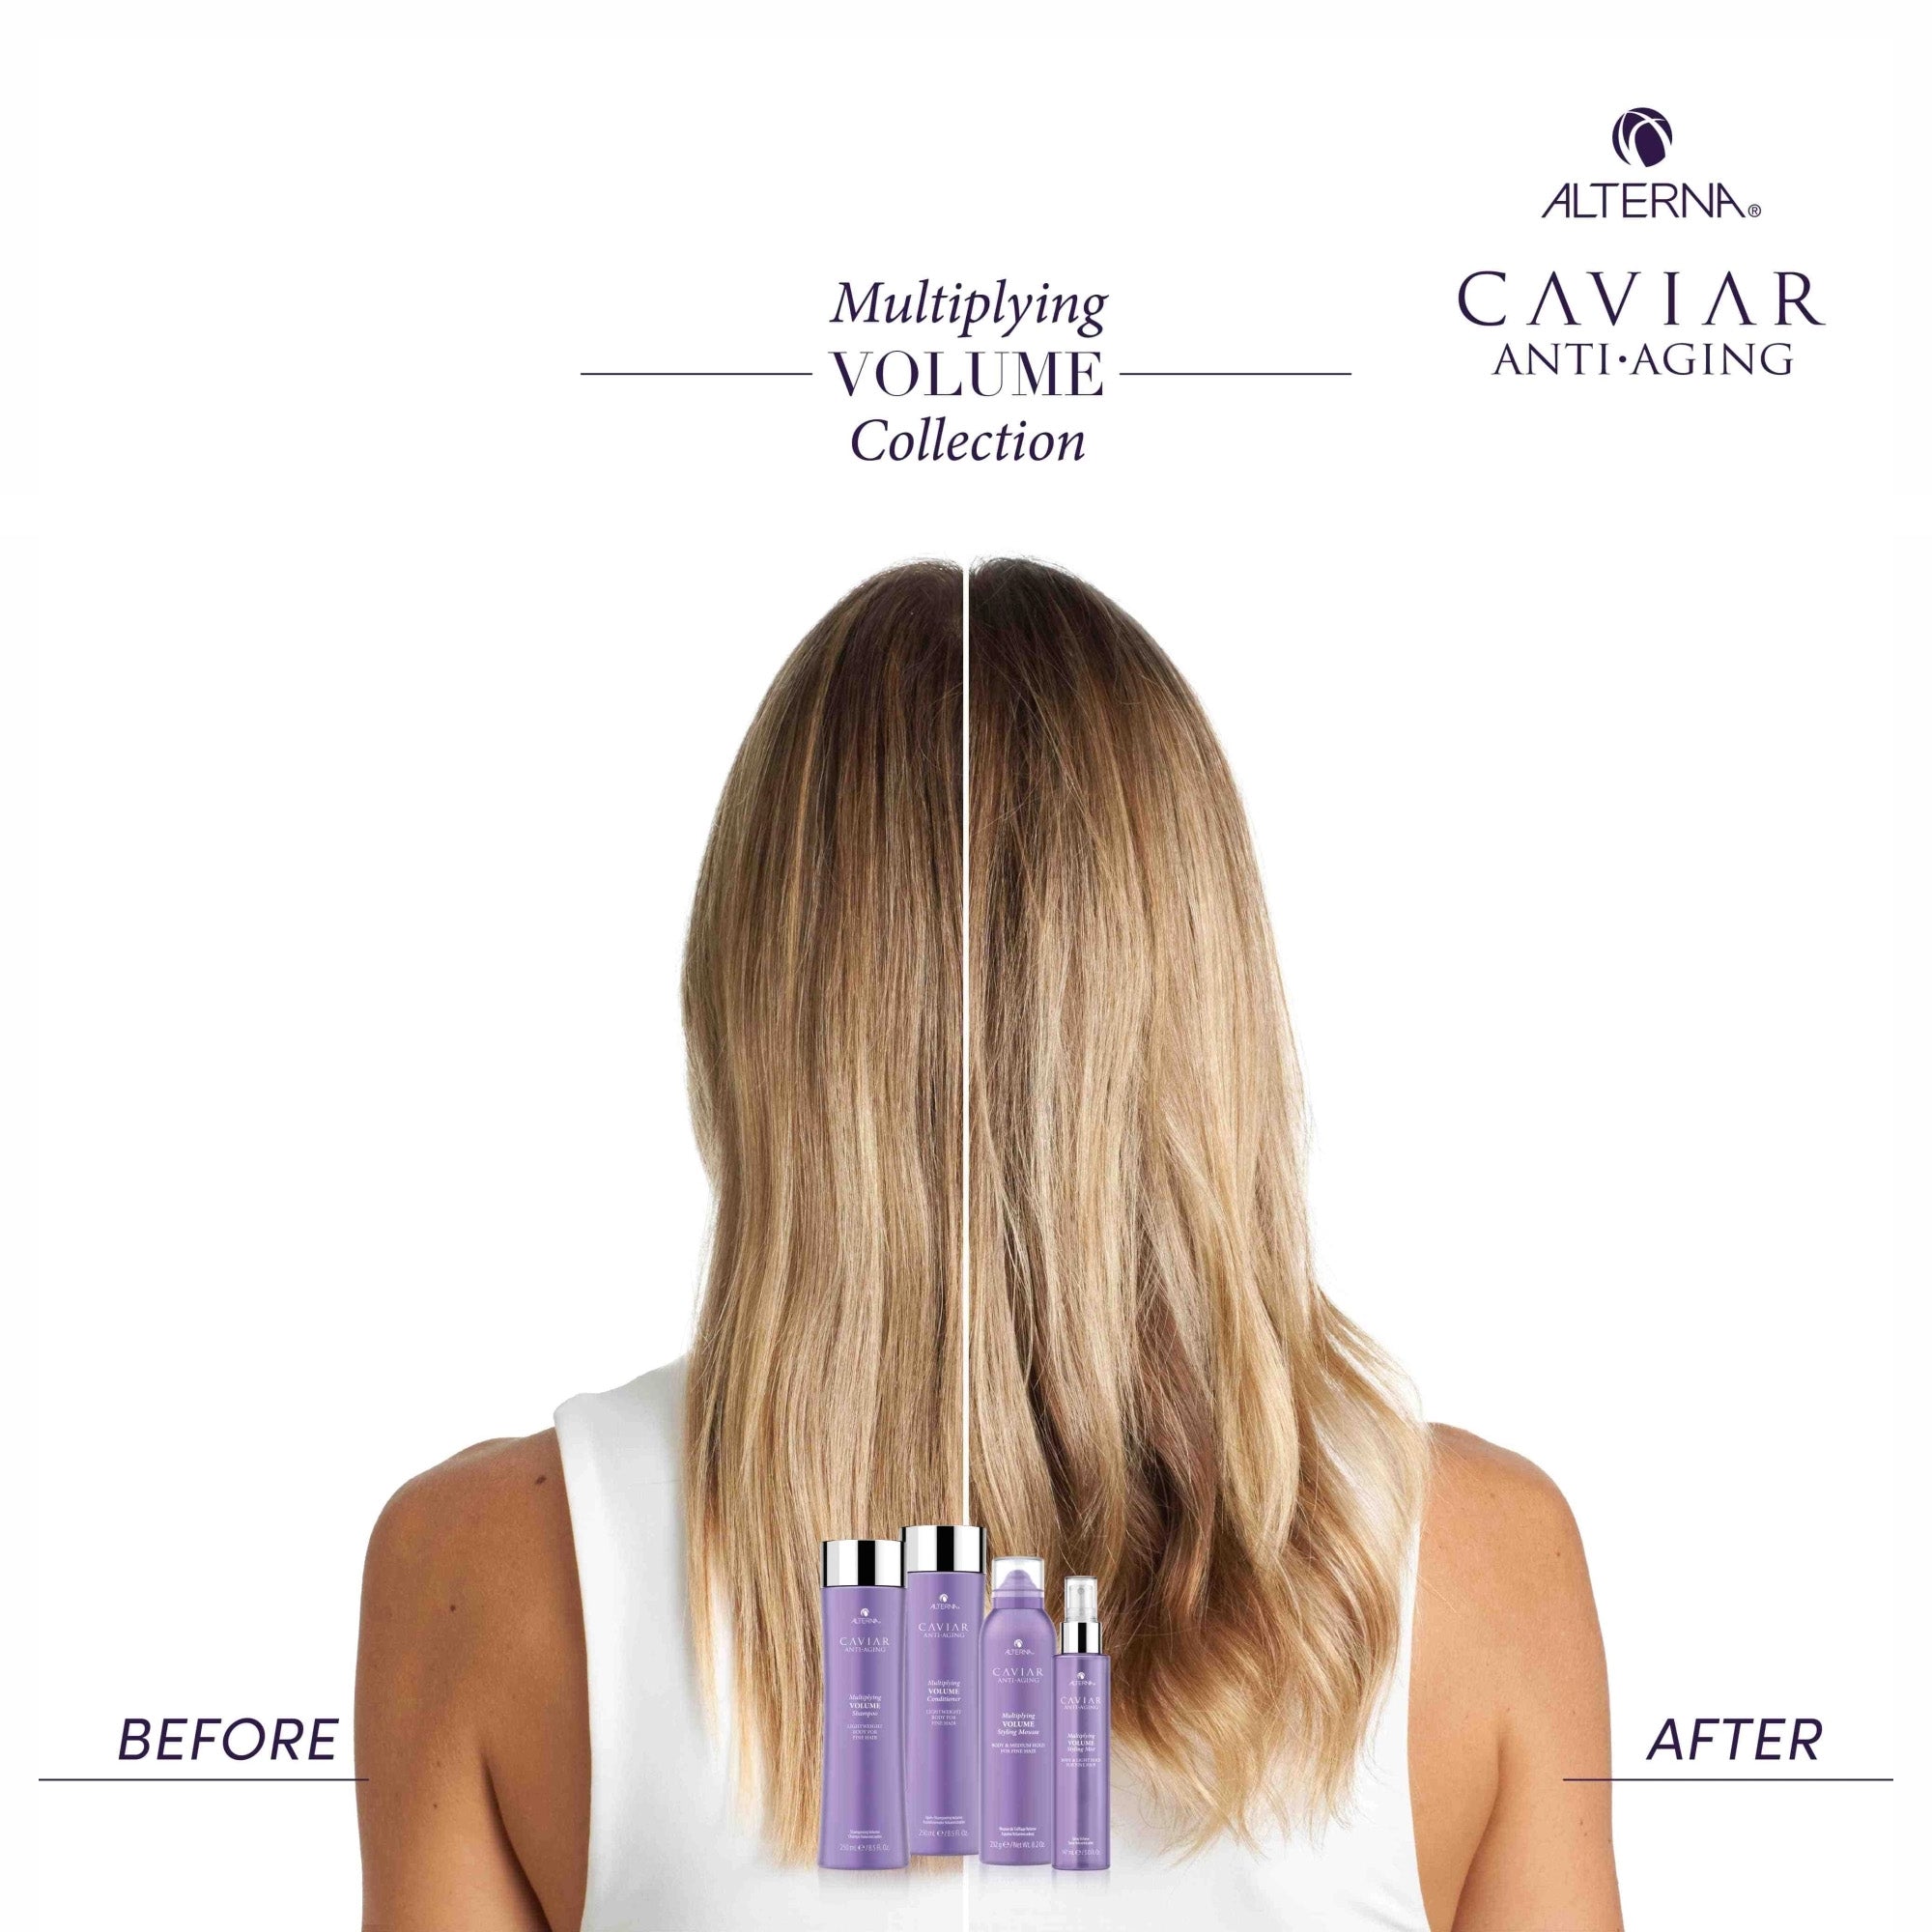 Alterna Caviar Anti-Aging Multiplying Volume Shampoo / 8.5 OZ